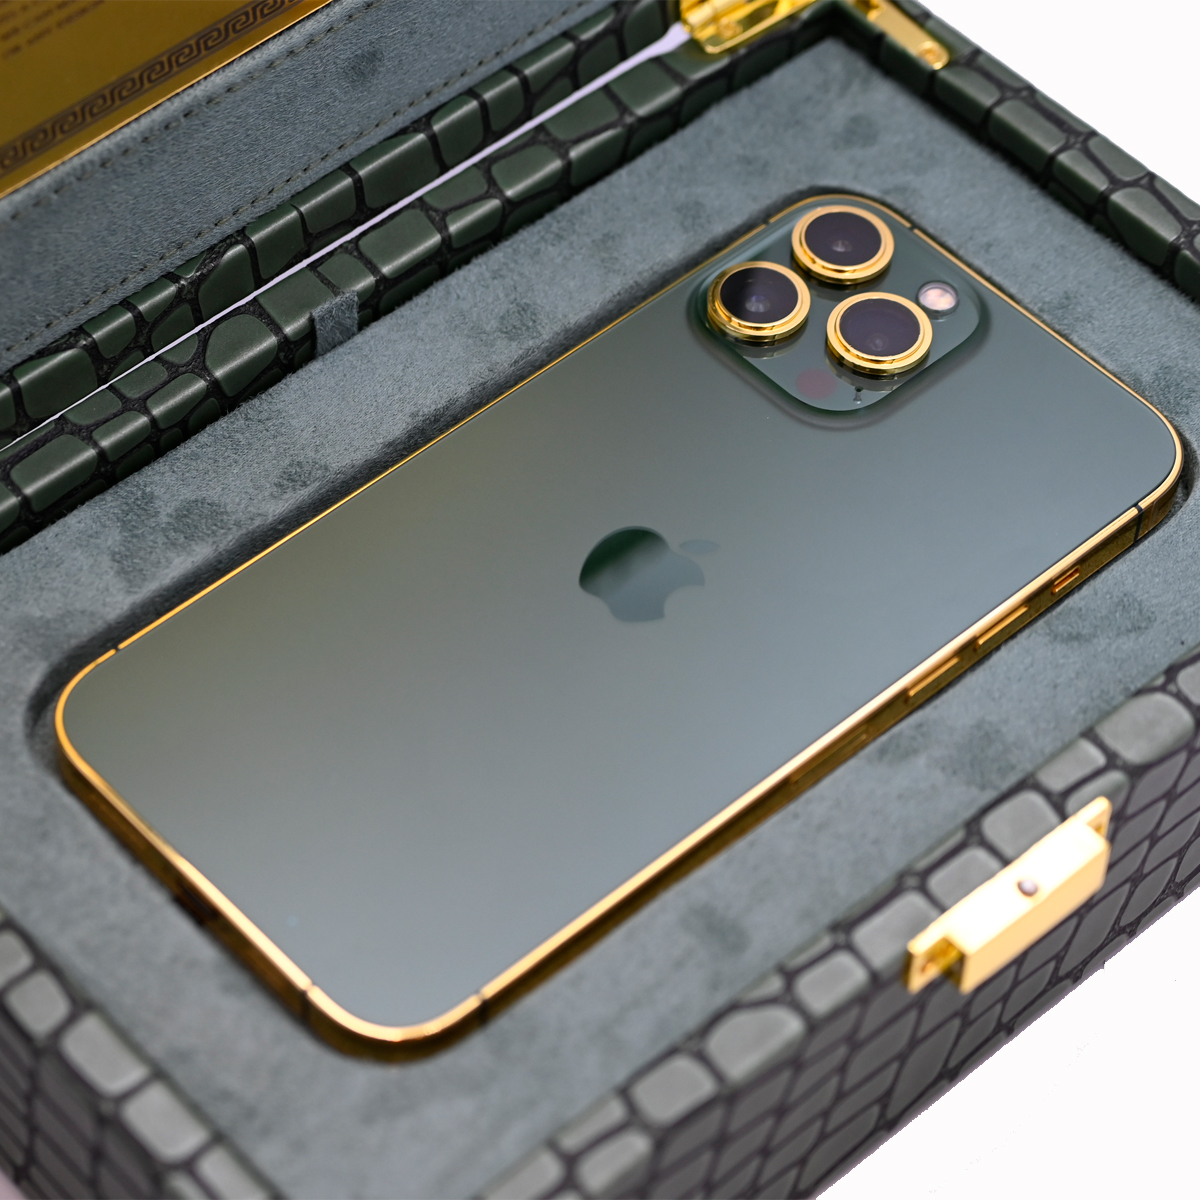 Caviar Luxury Customized 24k Gold Frame iPhone 13 Pro - Midnight Green 128 GB